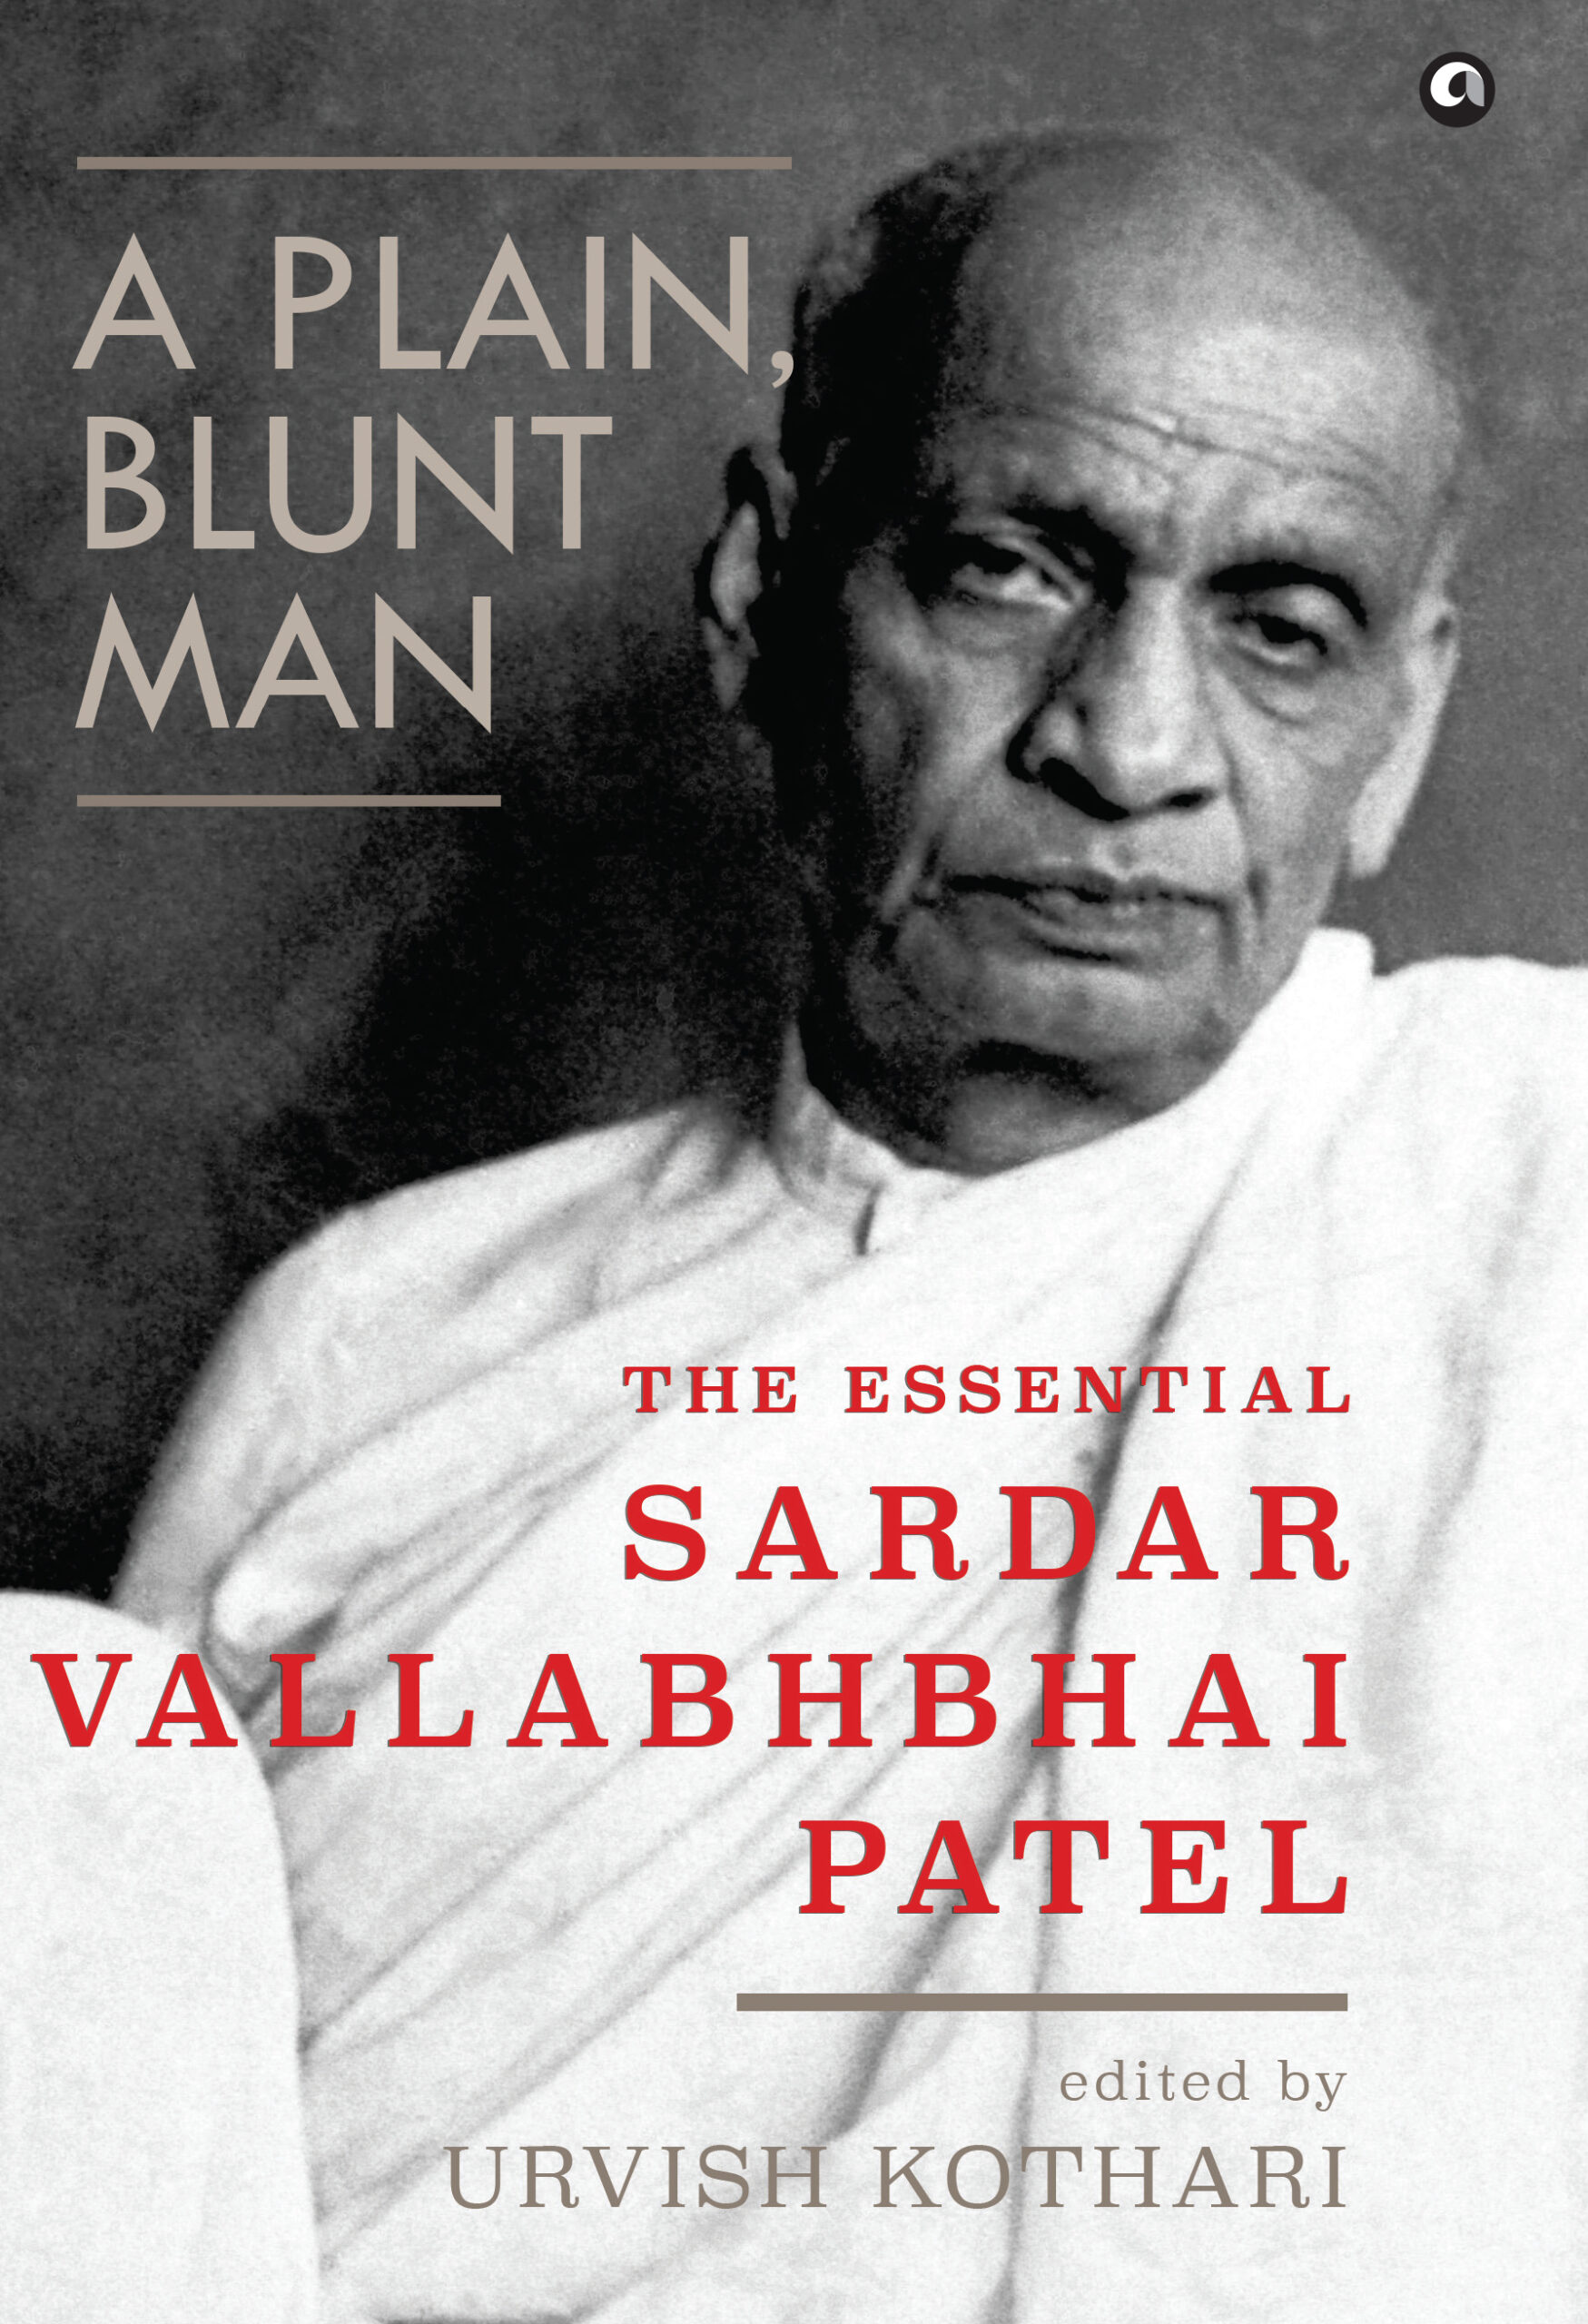 A Plain, Blunt Man: The Essential Sardar Vallabhbhai Patel